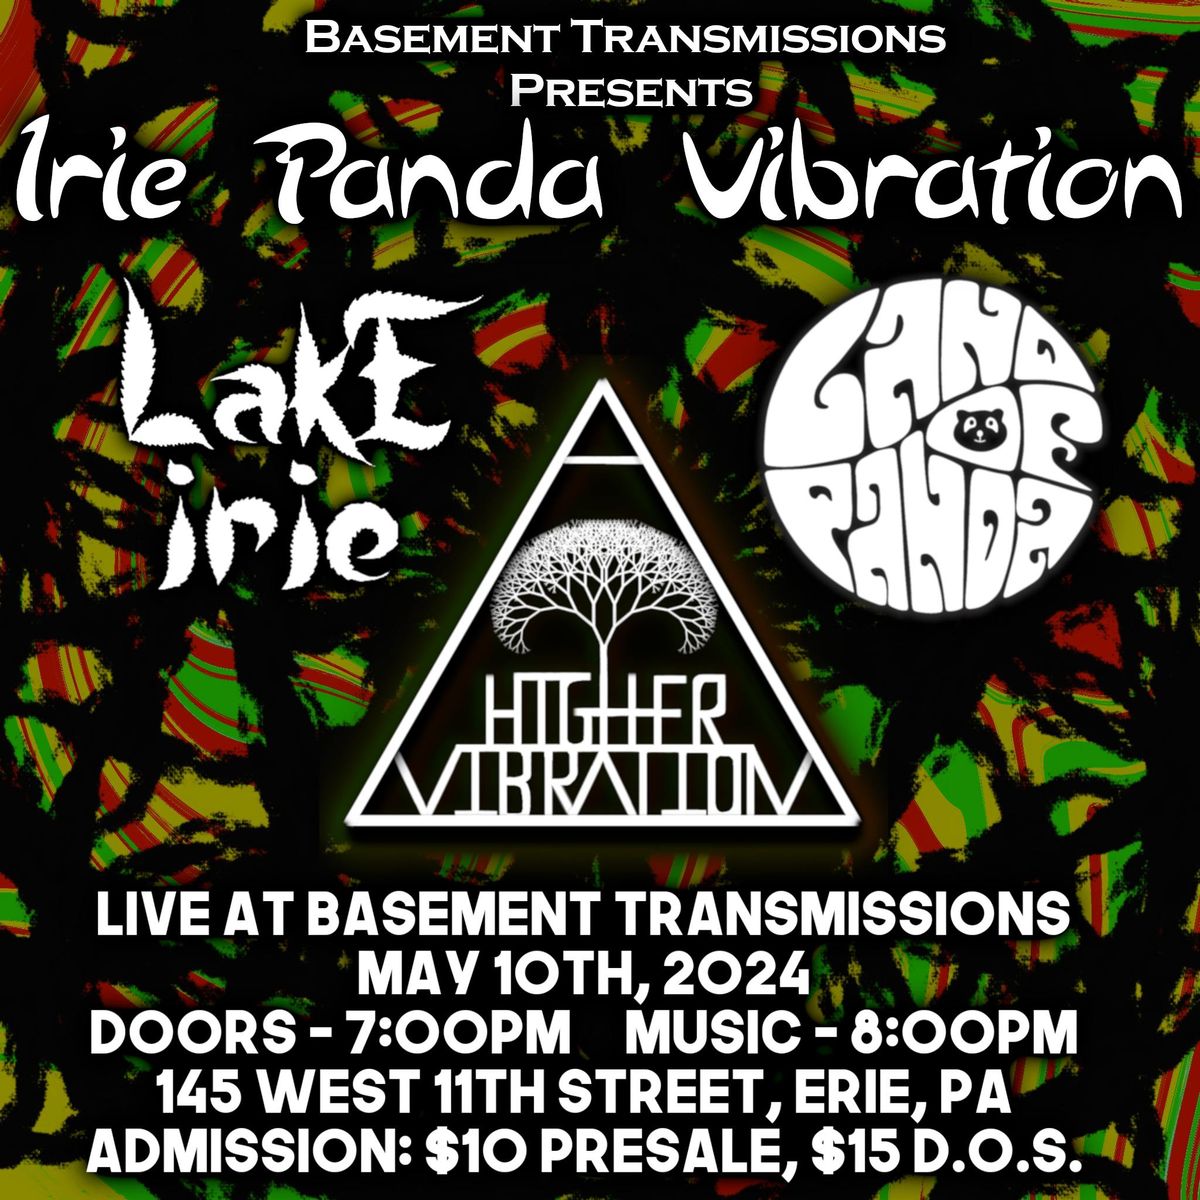 Basement Transmissions Presents: Irie Panda Vibration